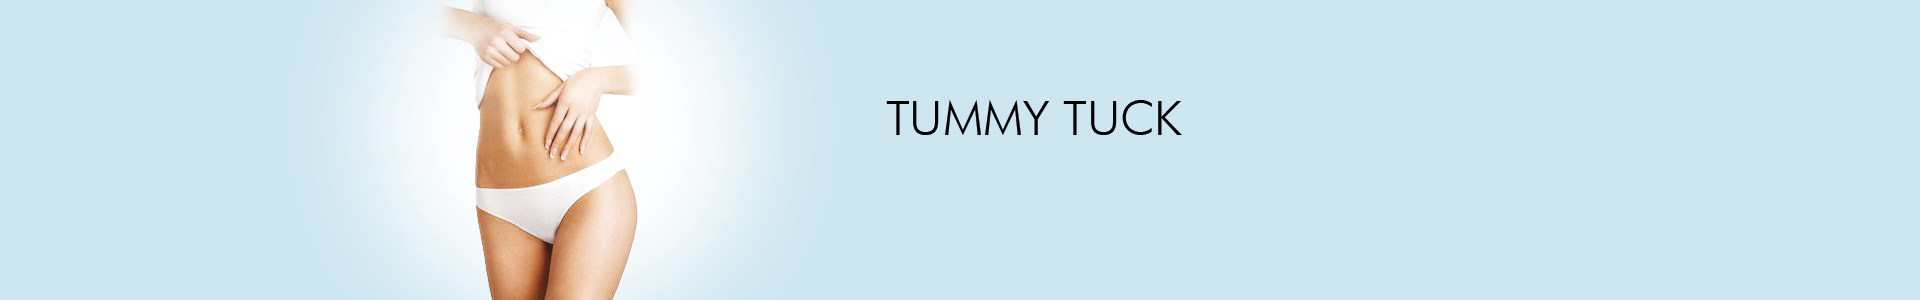 Tummy Tuck surgery in India